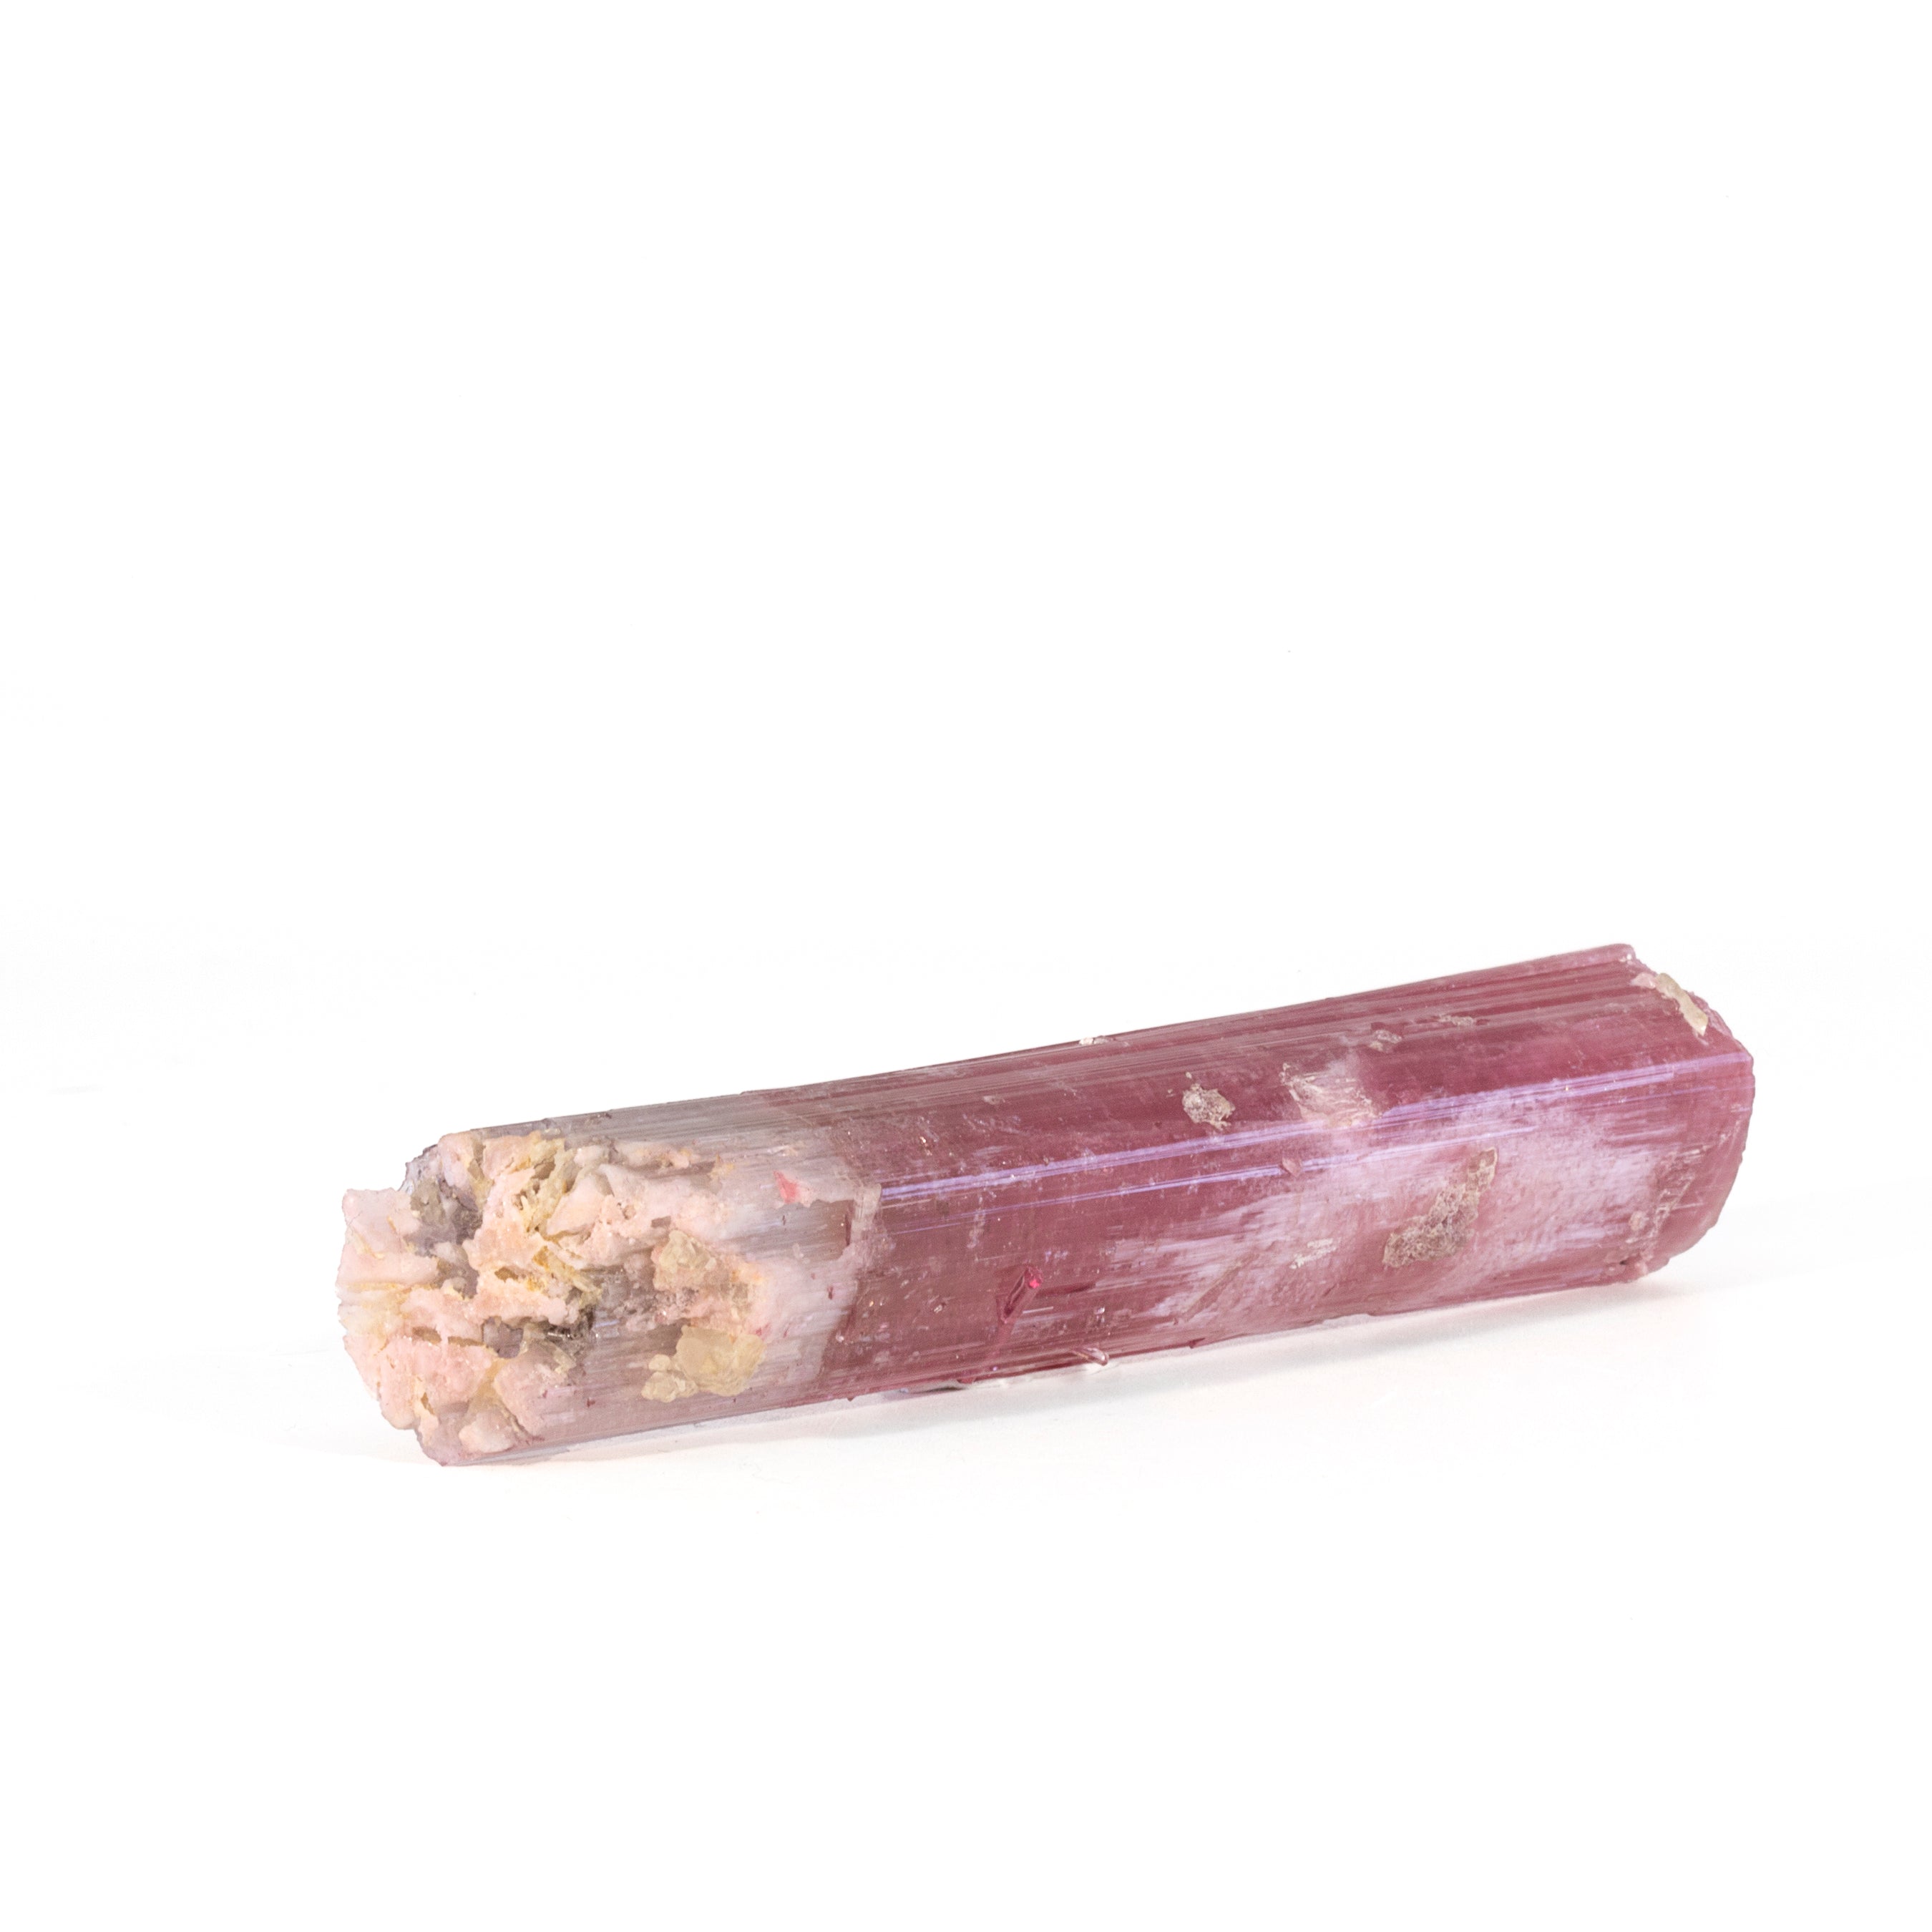 Cat's Eye Pink Tourmaline 69.4 grams 3.8 inch Natural Crystal - Himalaya Mine, San Diego, California, USA - JJX-003 - Crystalarium